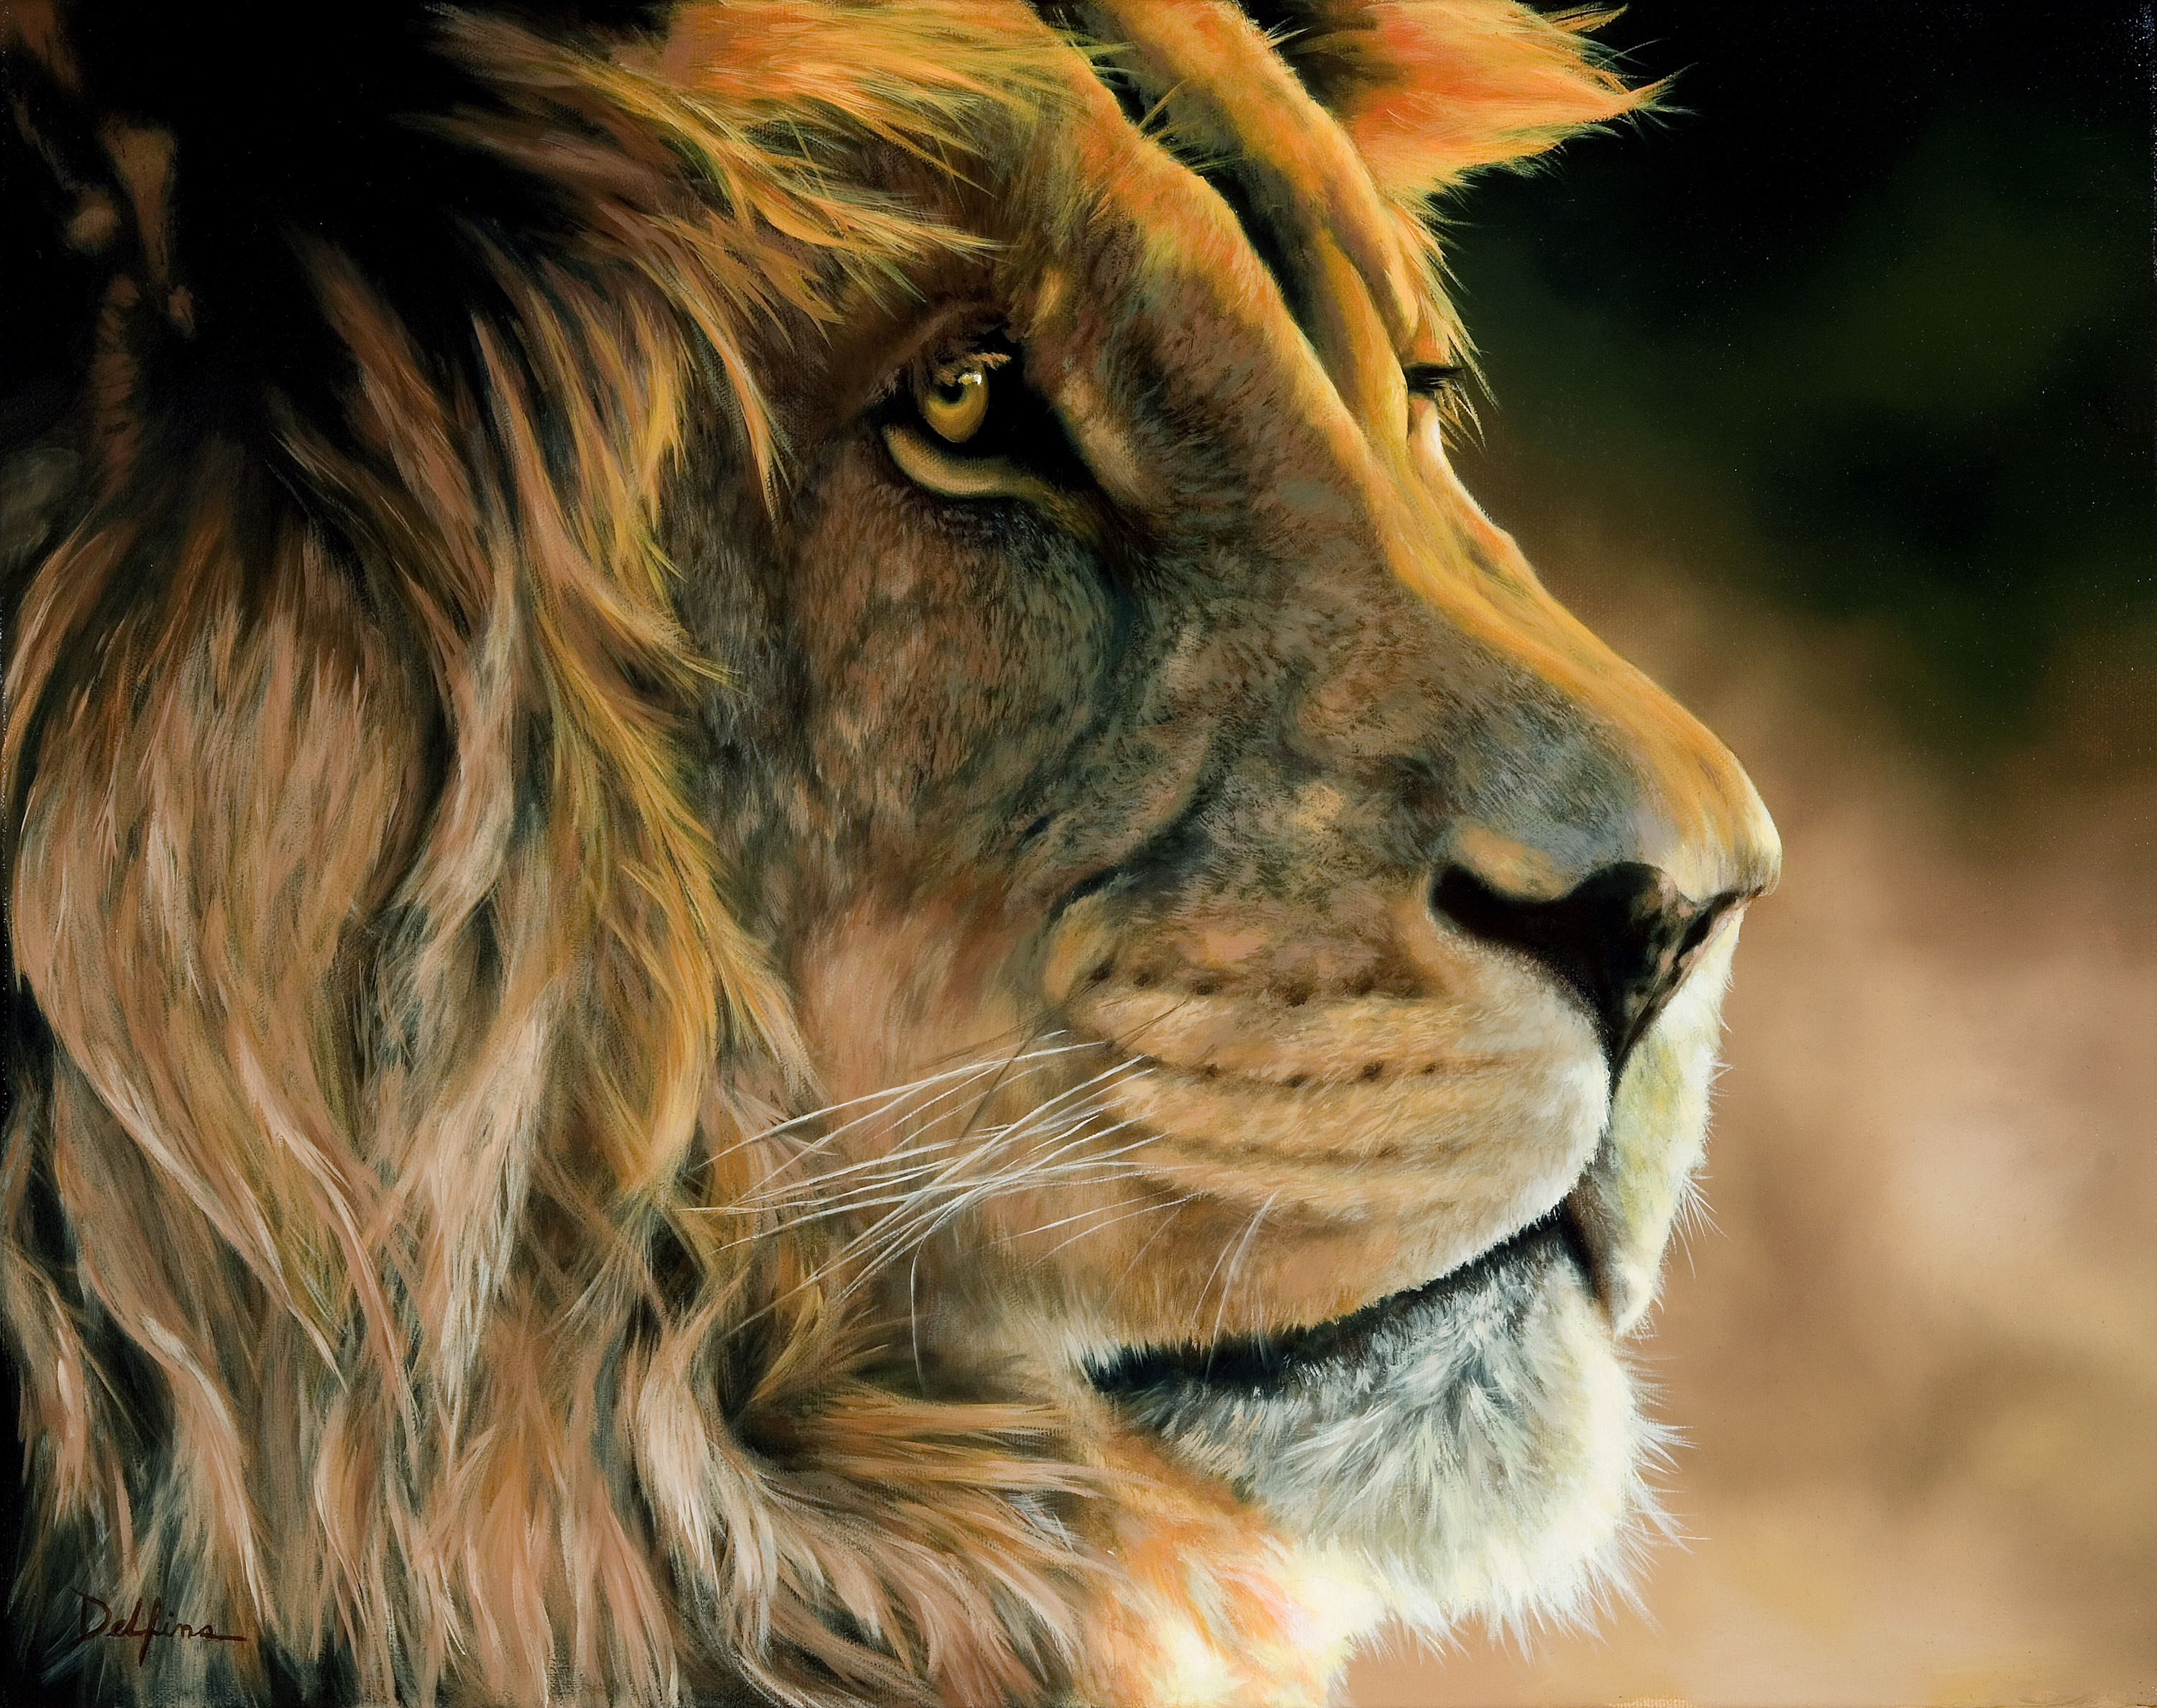 Linda karagozian   lion l7ysep